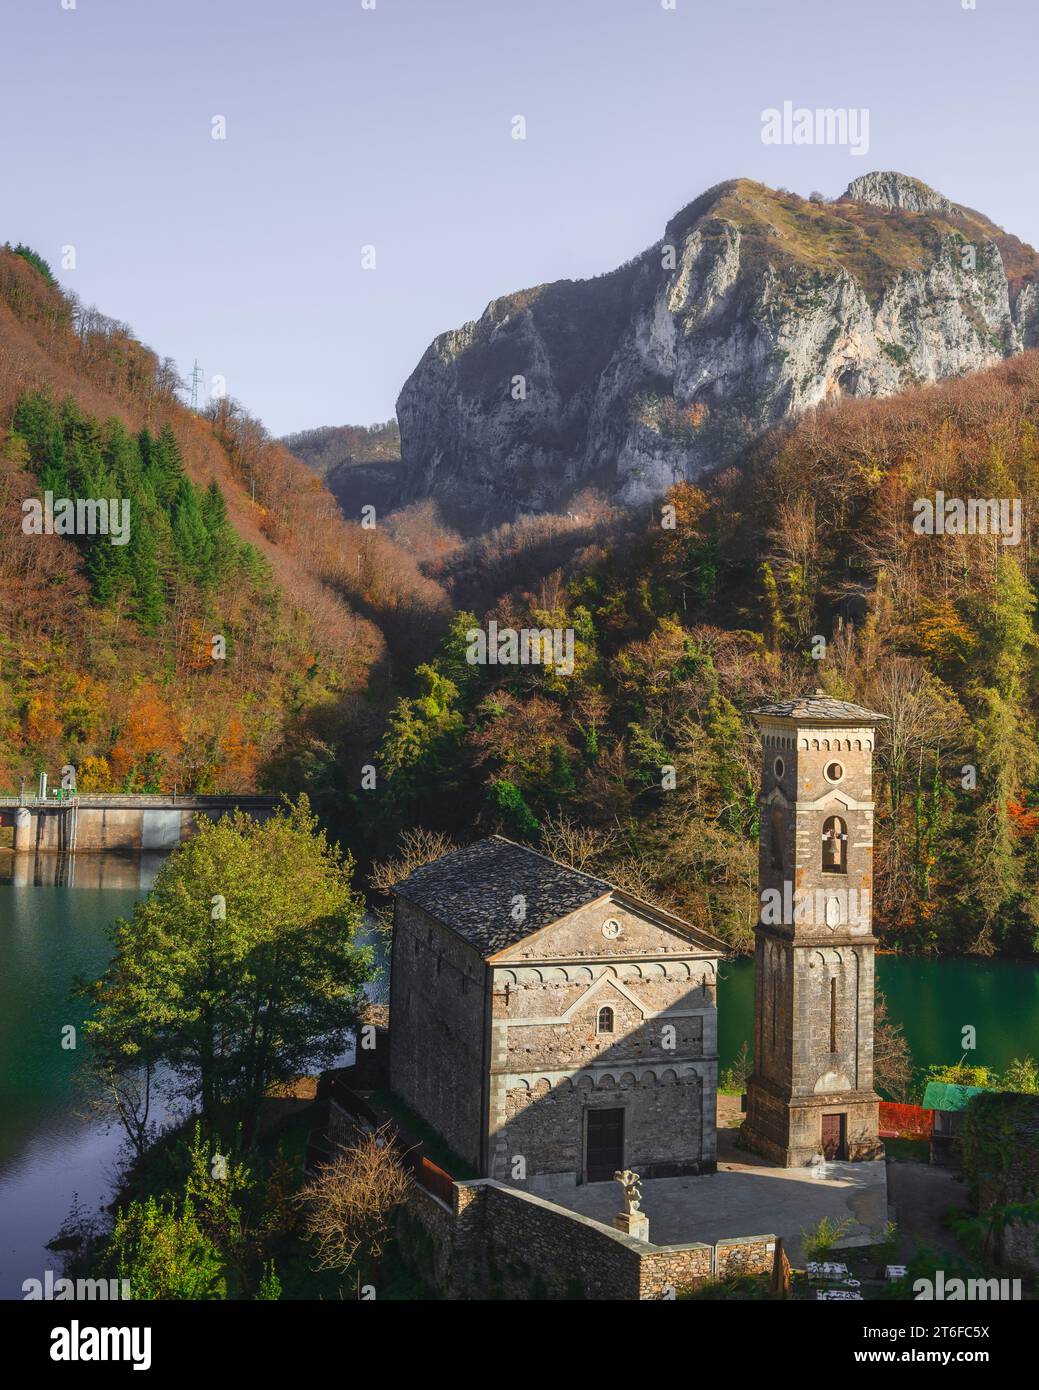 Isola Santa village, church, dam and lake in autumn. Apuan Alps in the background. Garfagnana, Tuscany region, Italy. Stock Photo